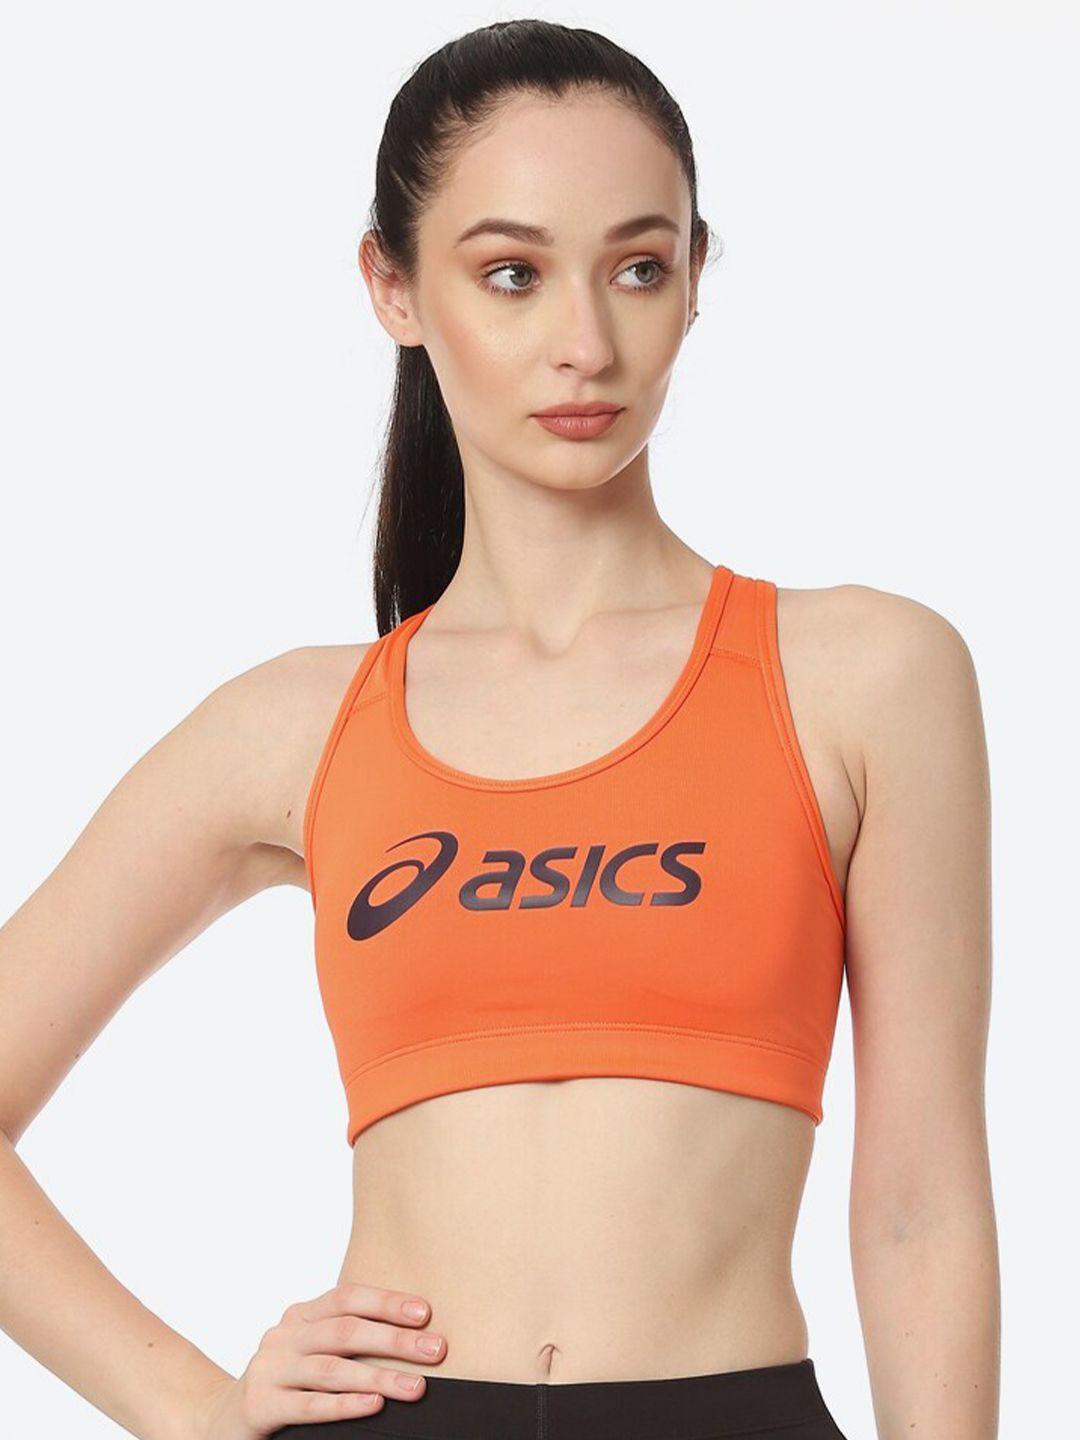 asics women orange & black bra lightly padded sports bra